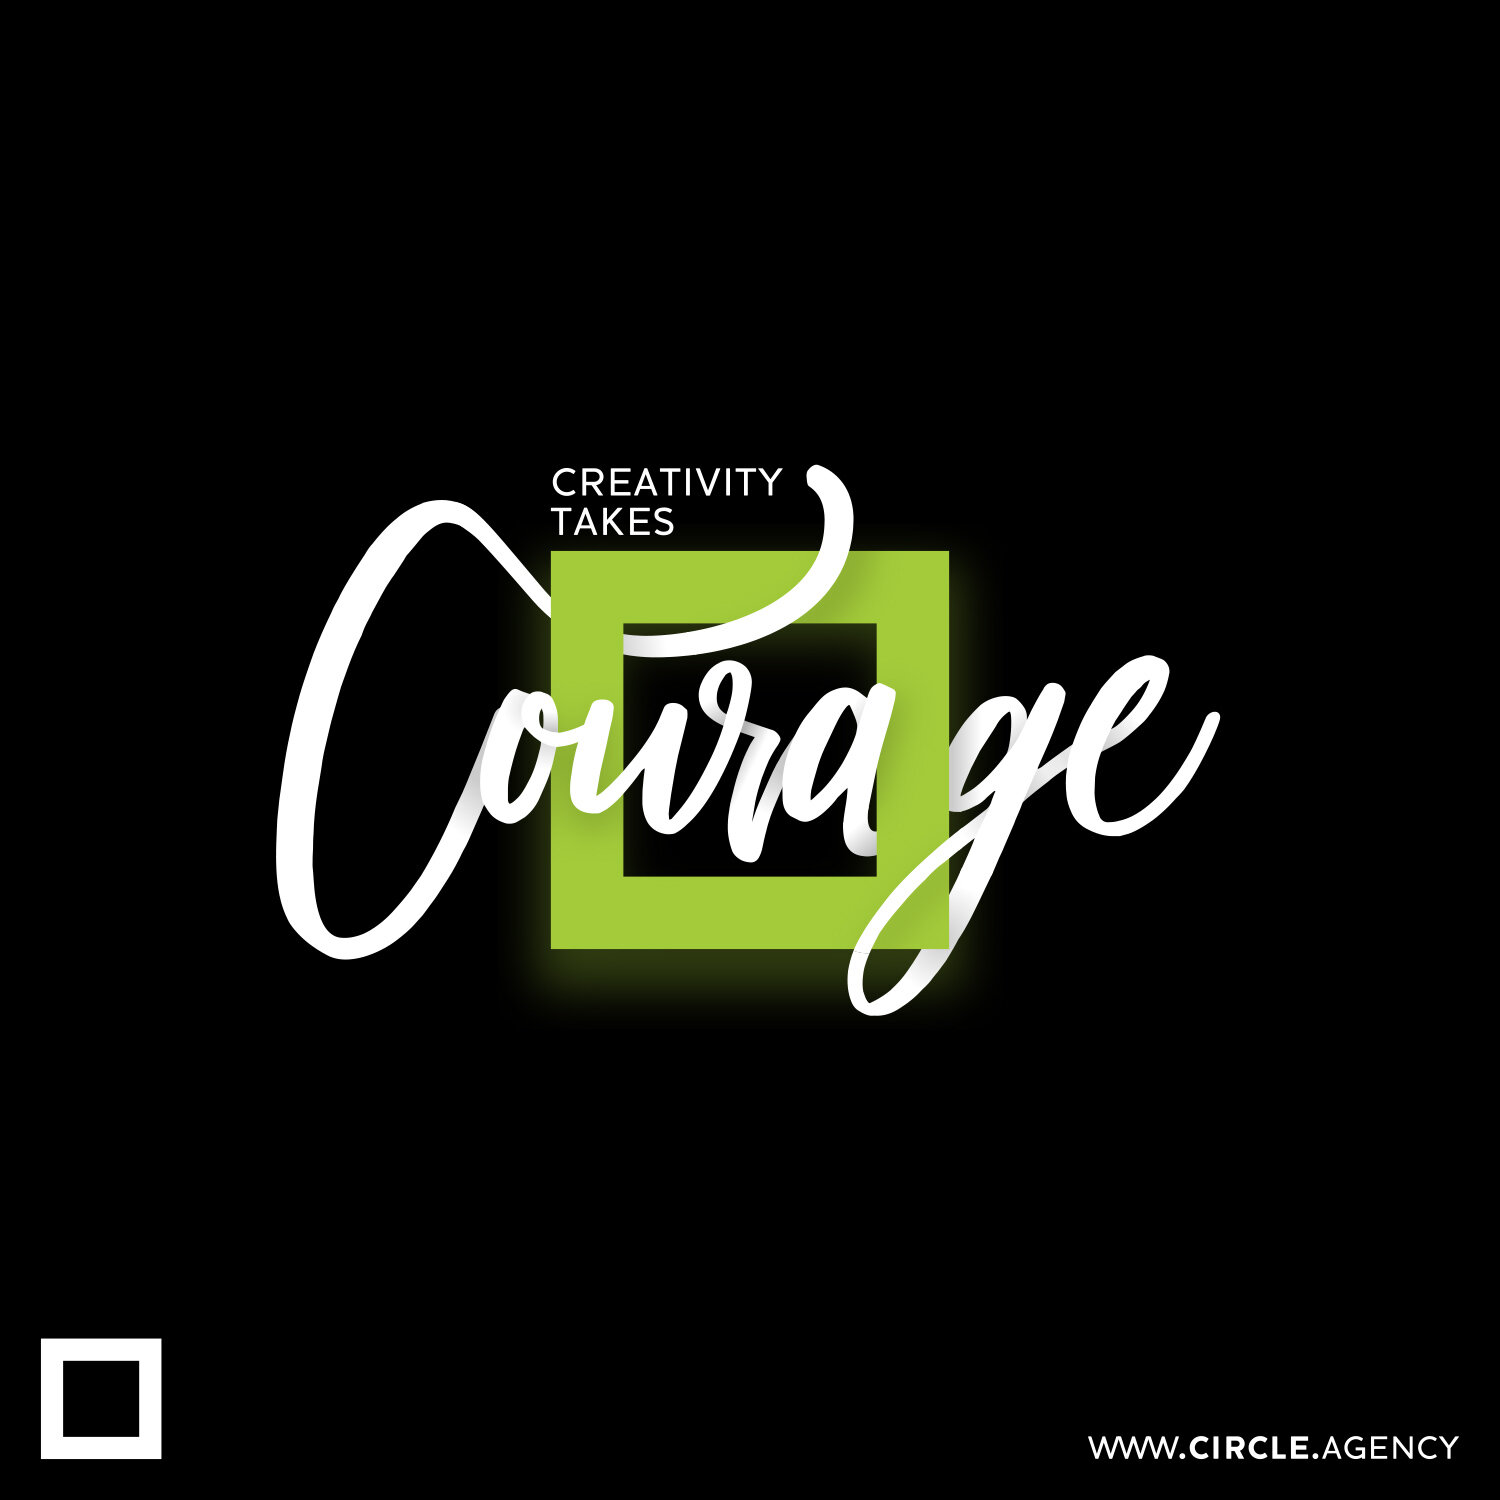 courage_instagram_post_circle_visual_communication_square_shap_creative_branding_social_media_SM_digital_online_agency_design_house.jpg